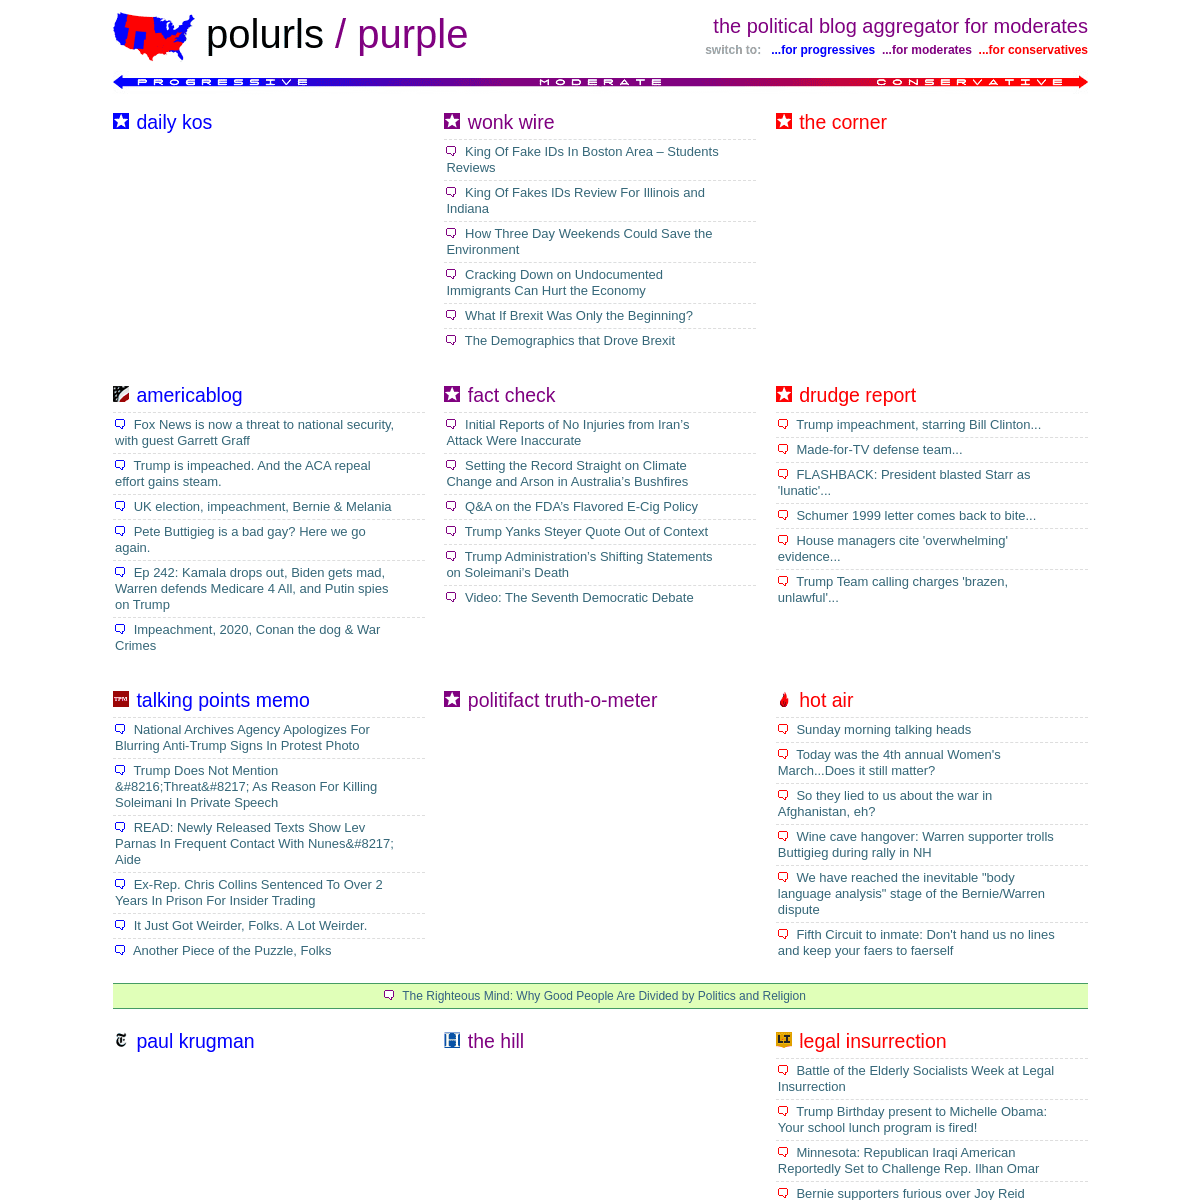 A complete backup of polurls.com